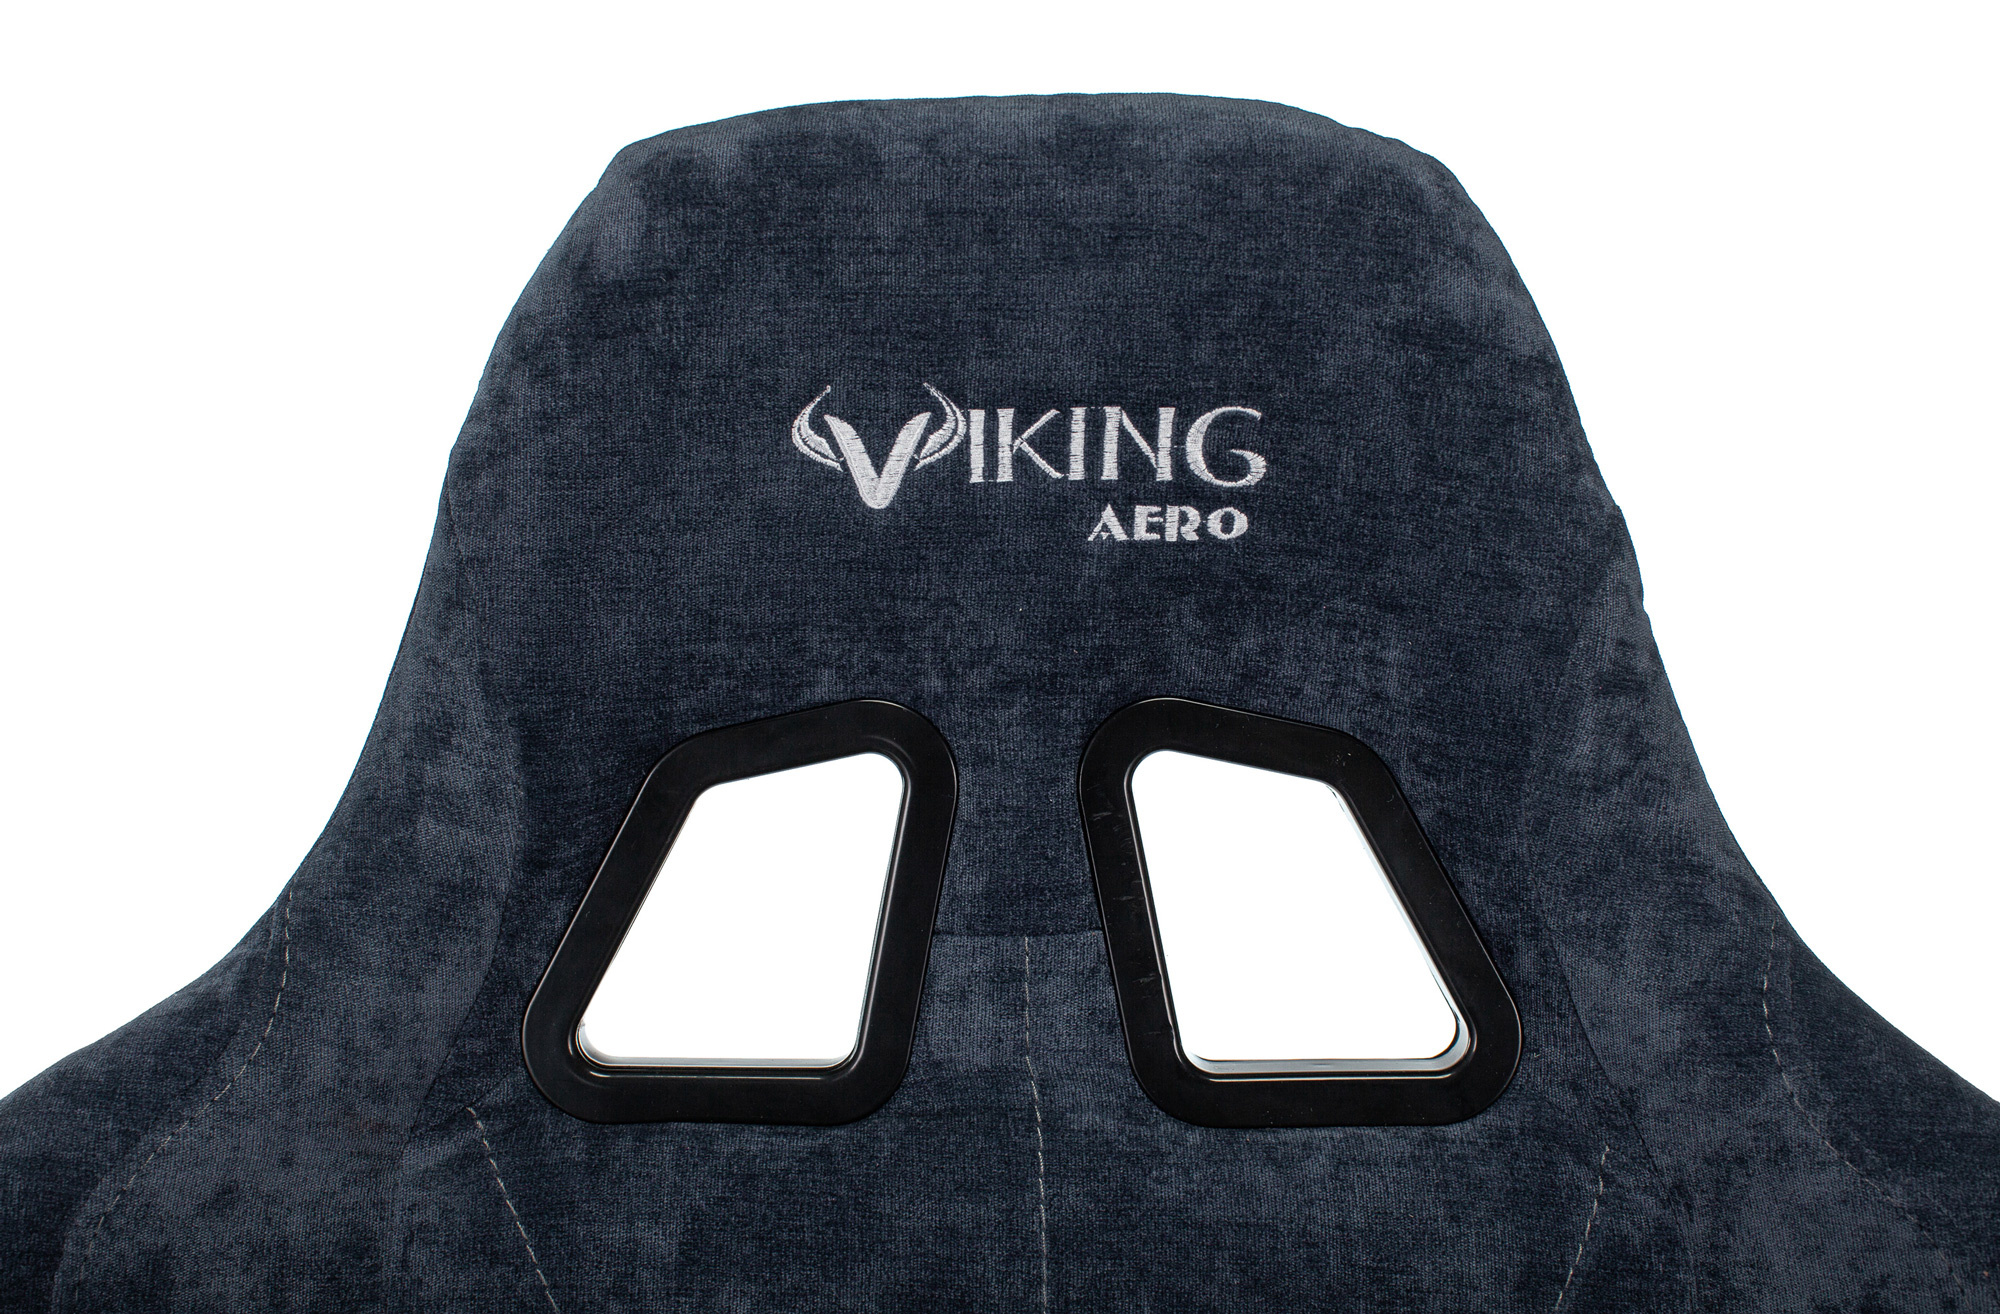 Кресло игровое Zombie VIKING KNIGHT, обивка: ткань, цвет: синий (VIKING KNIGHT LT27) от магазина Buro.store